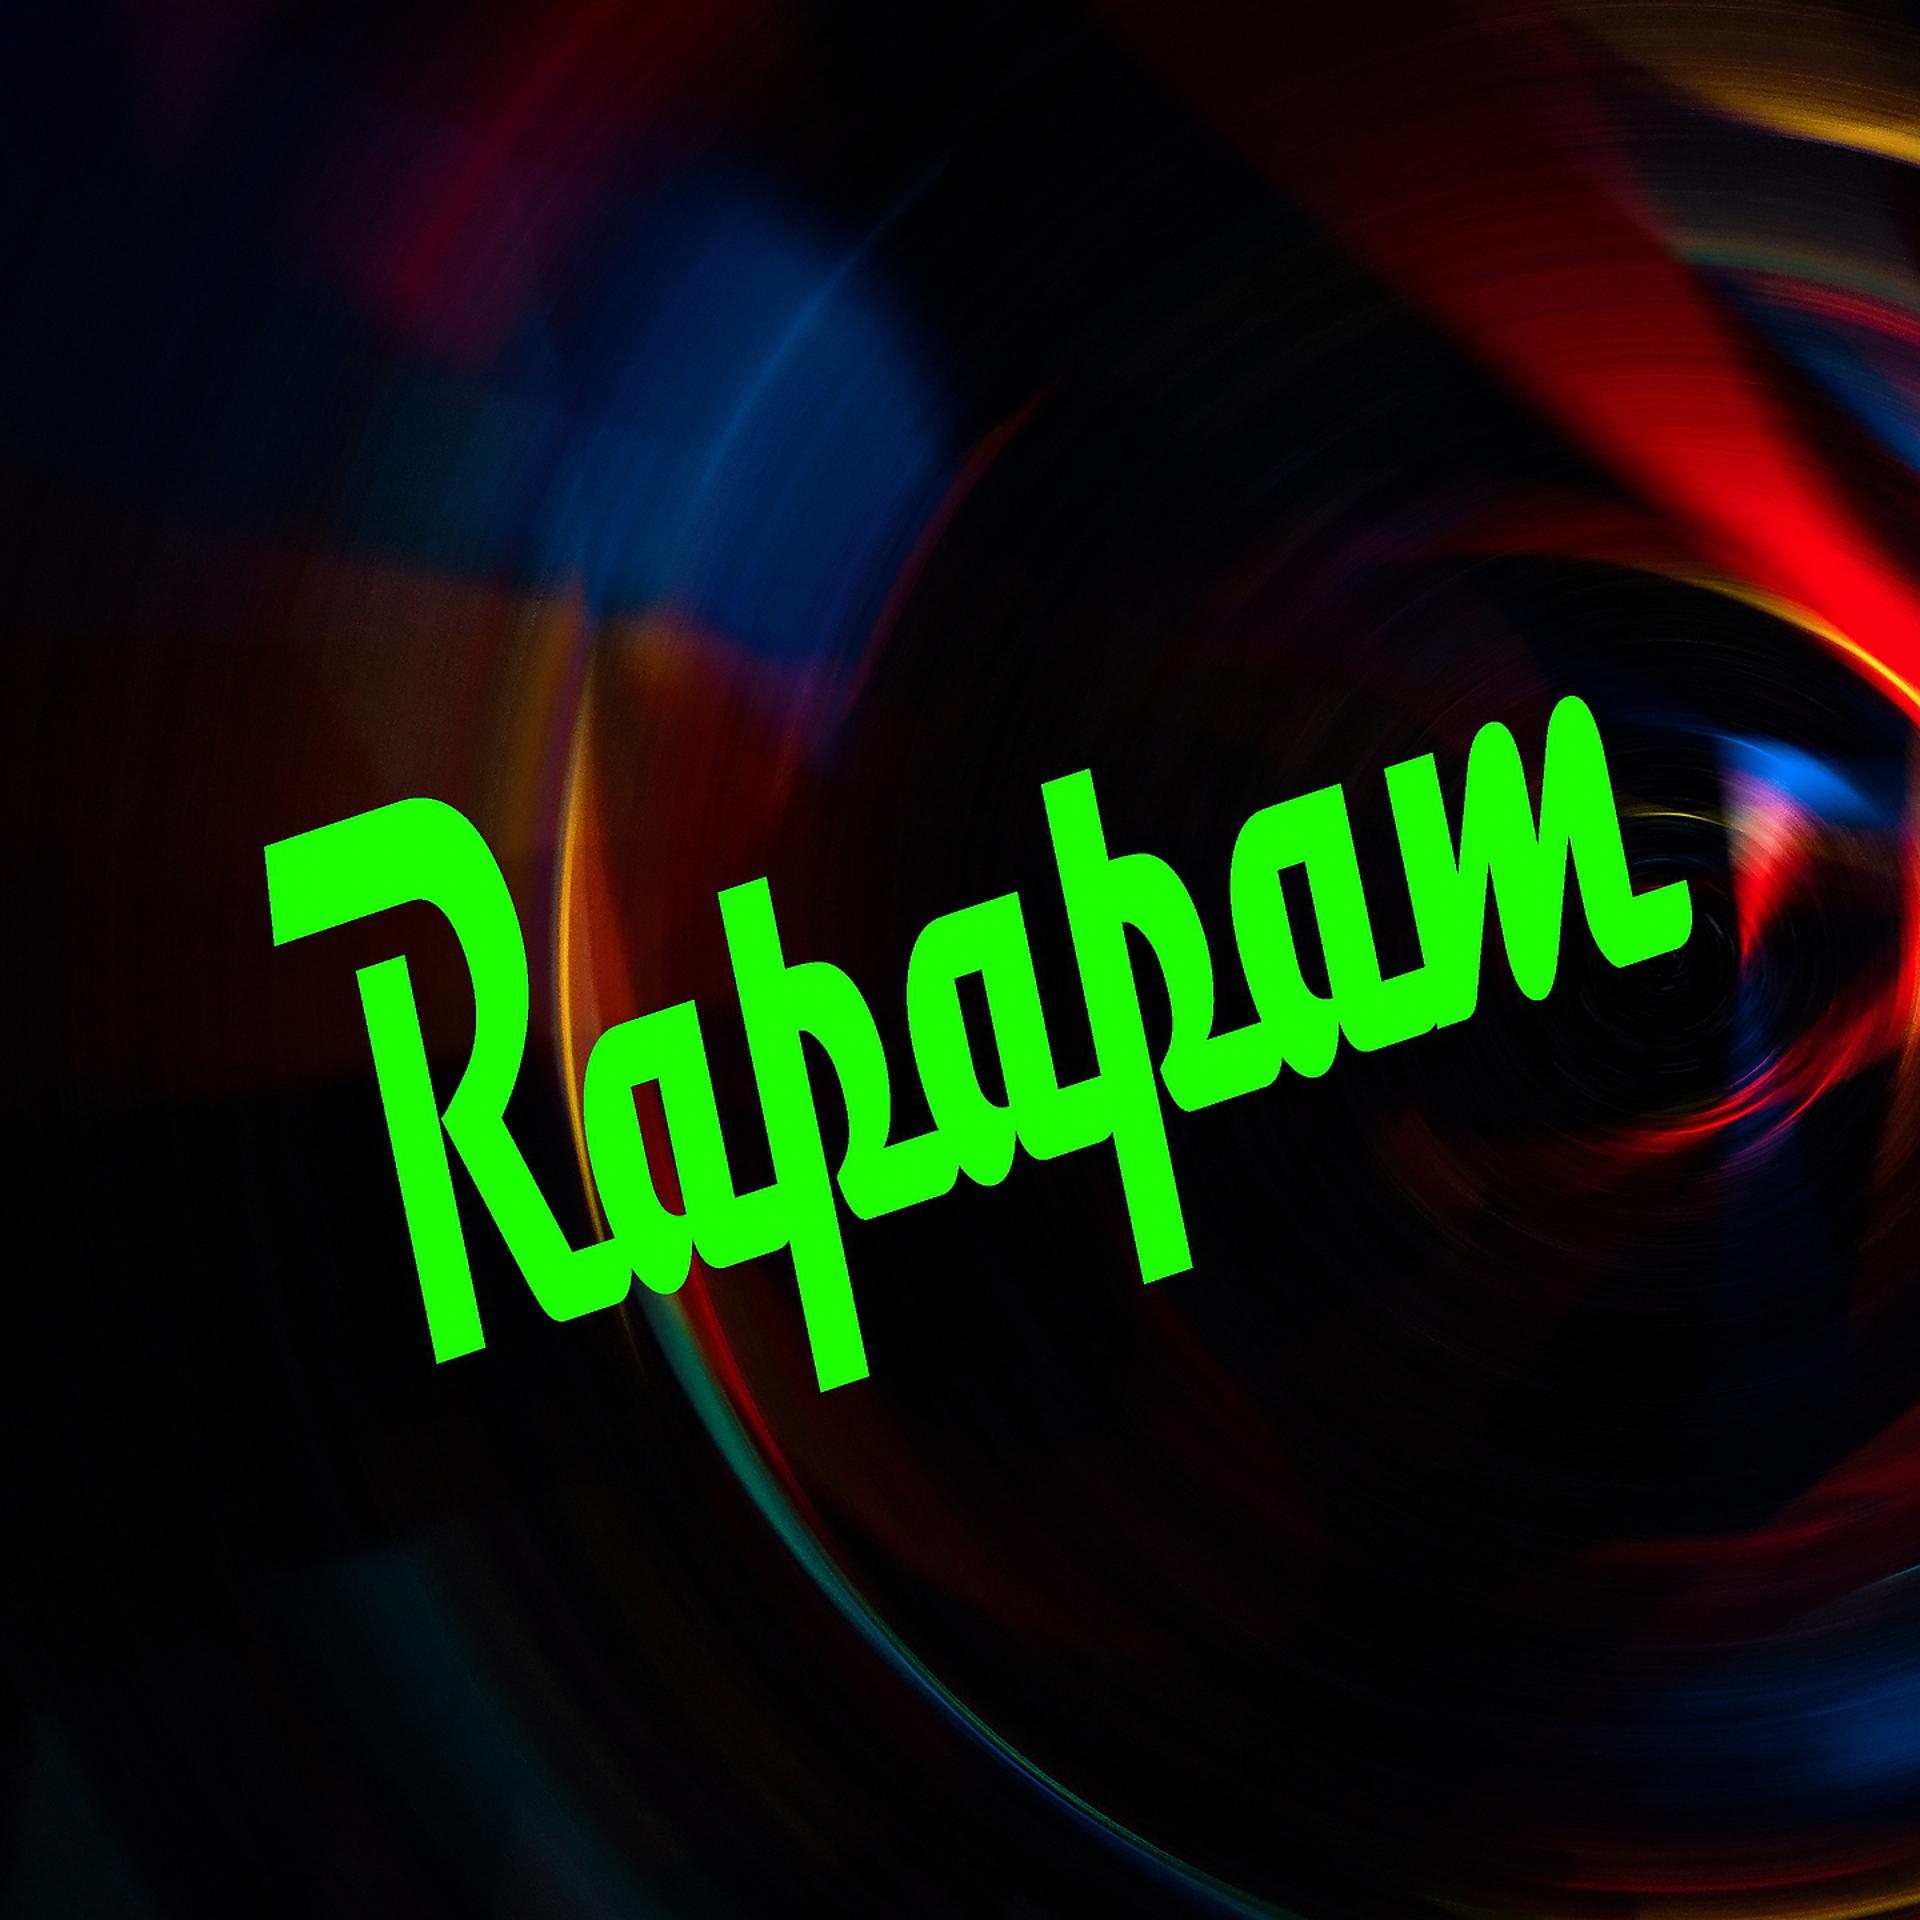 Постер альбома Rapapam